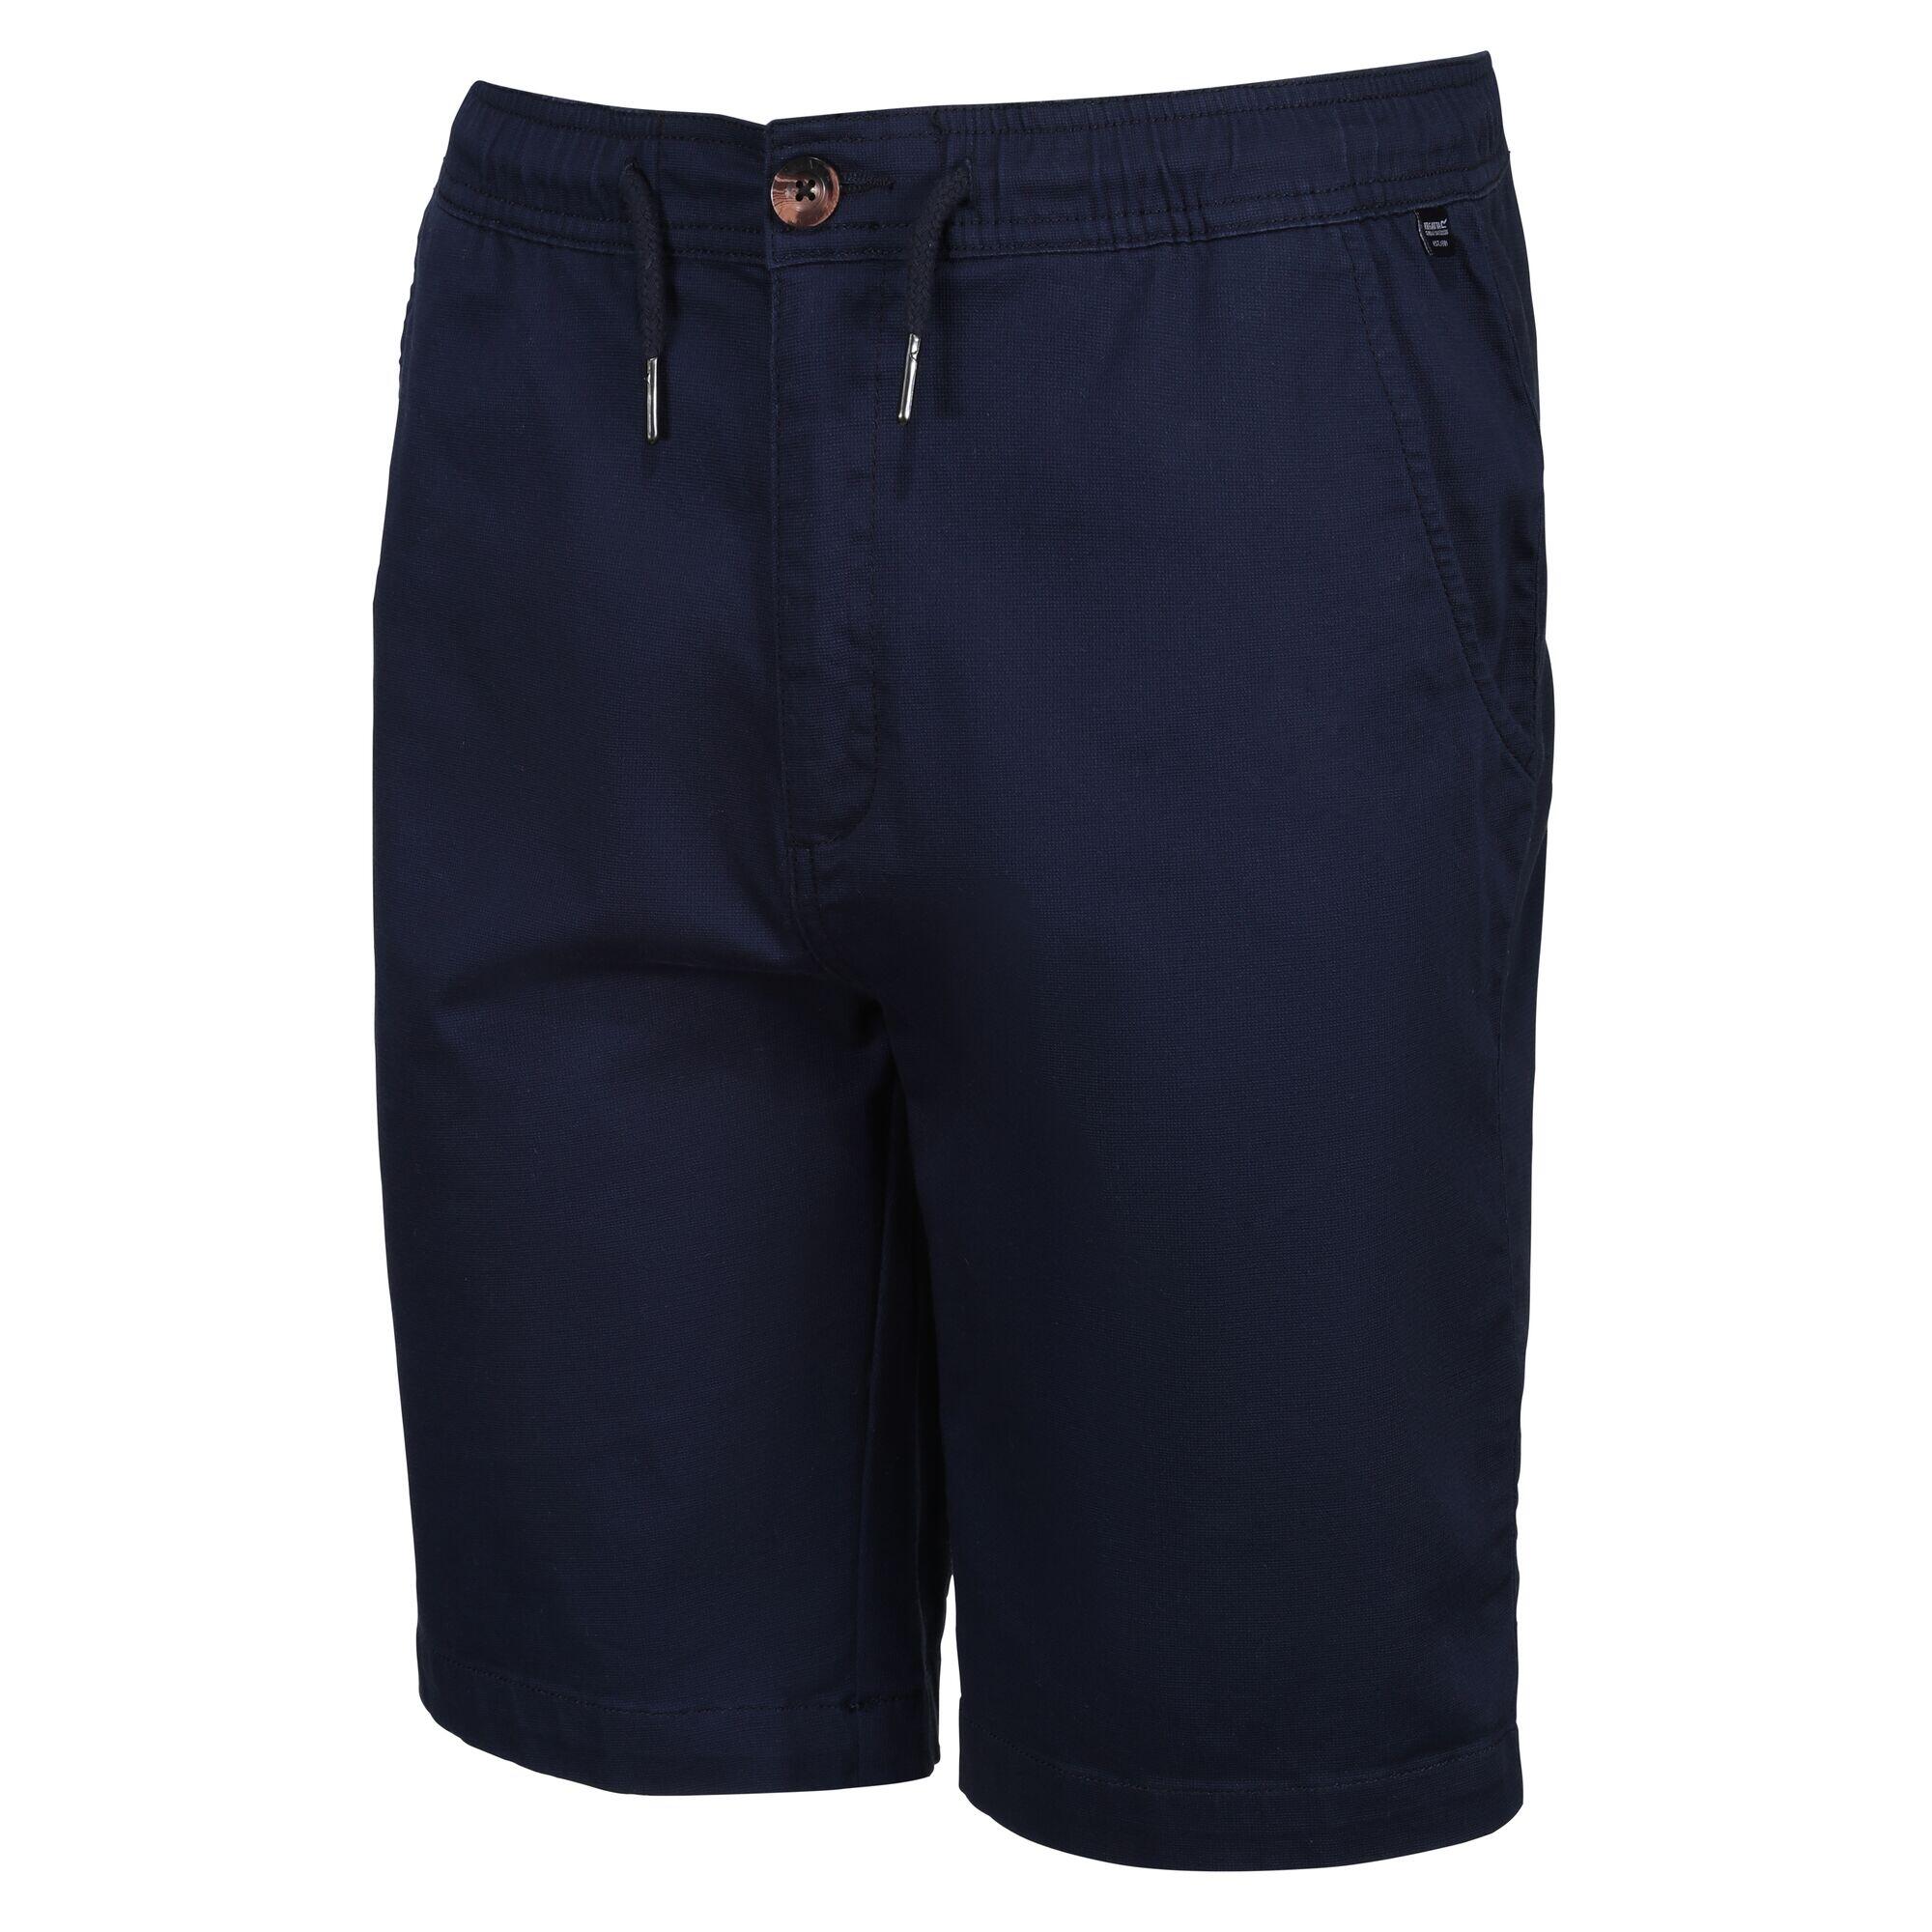 Albie Men's Walking Shorts - Navy 4/5